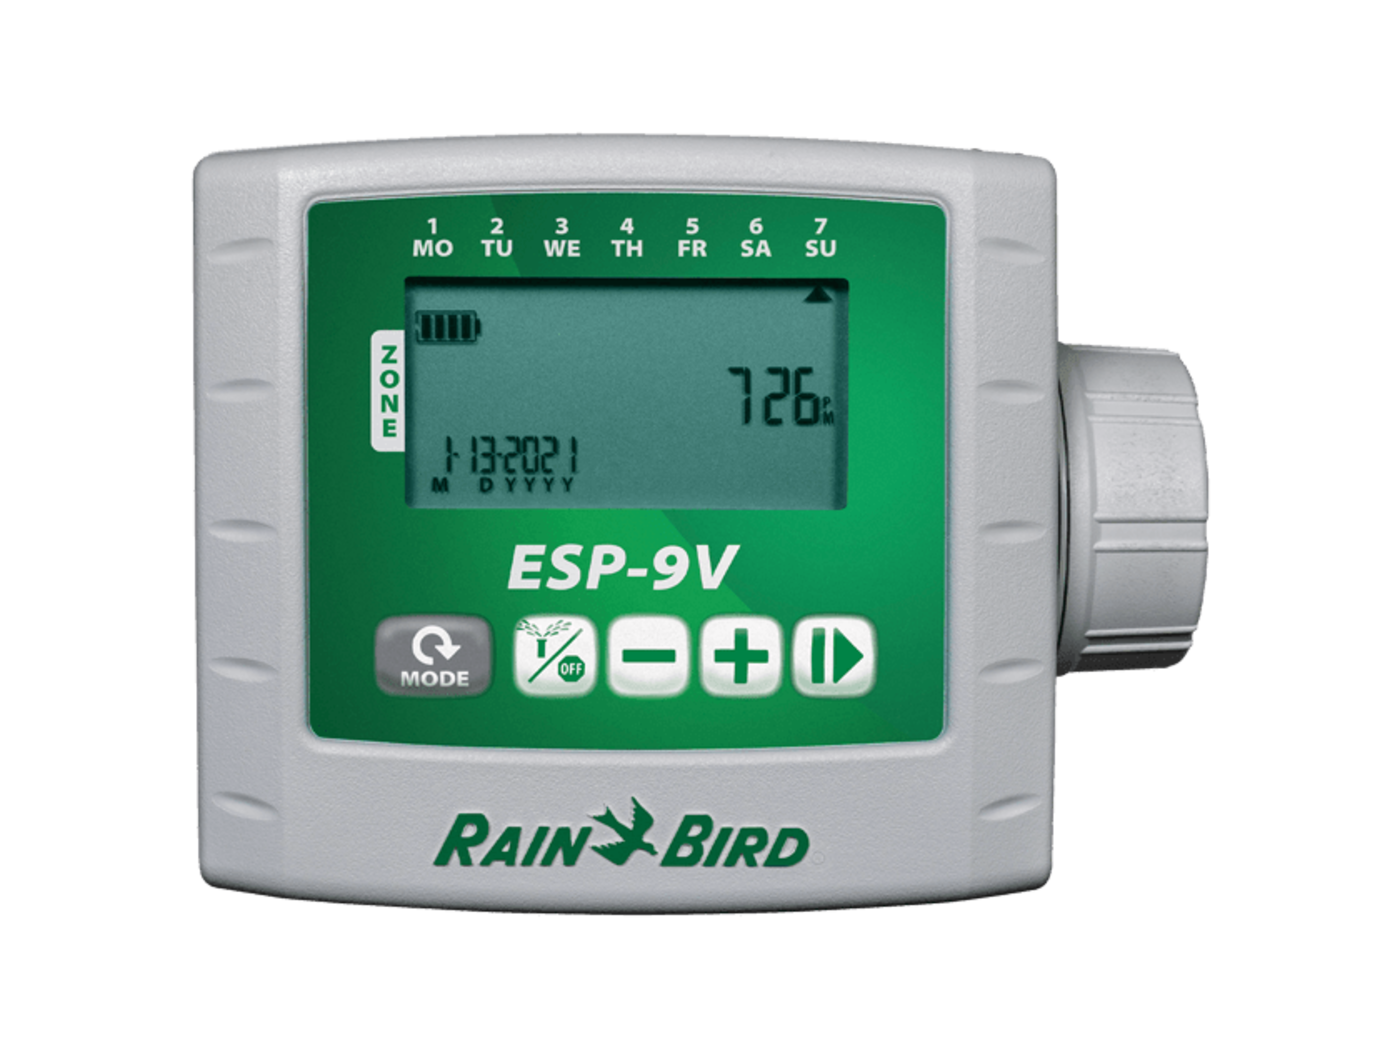 Rain Bird ESP-9V battery-operated irrigation controller